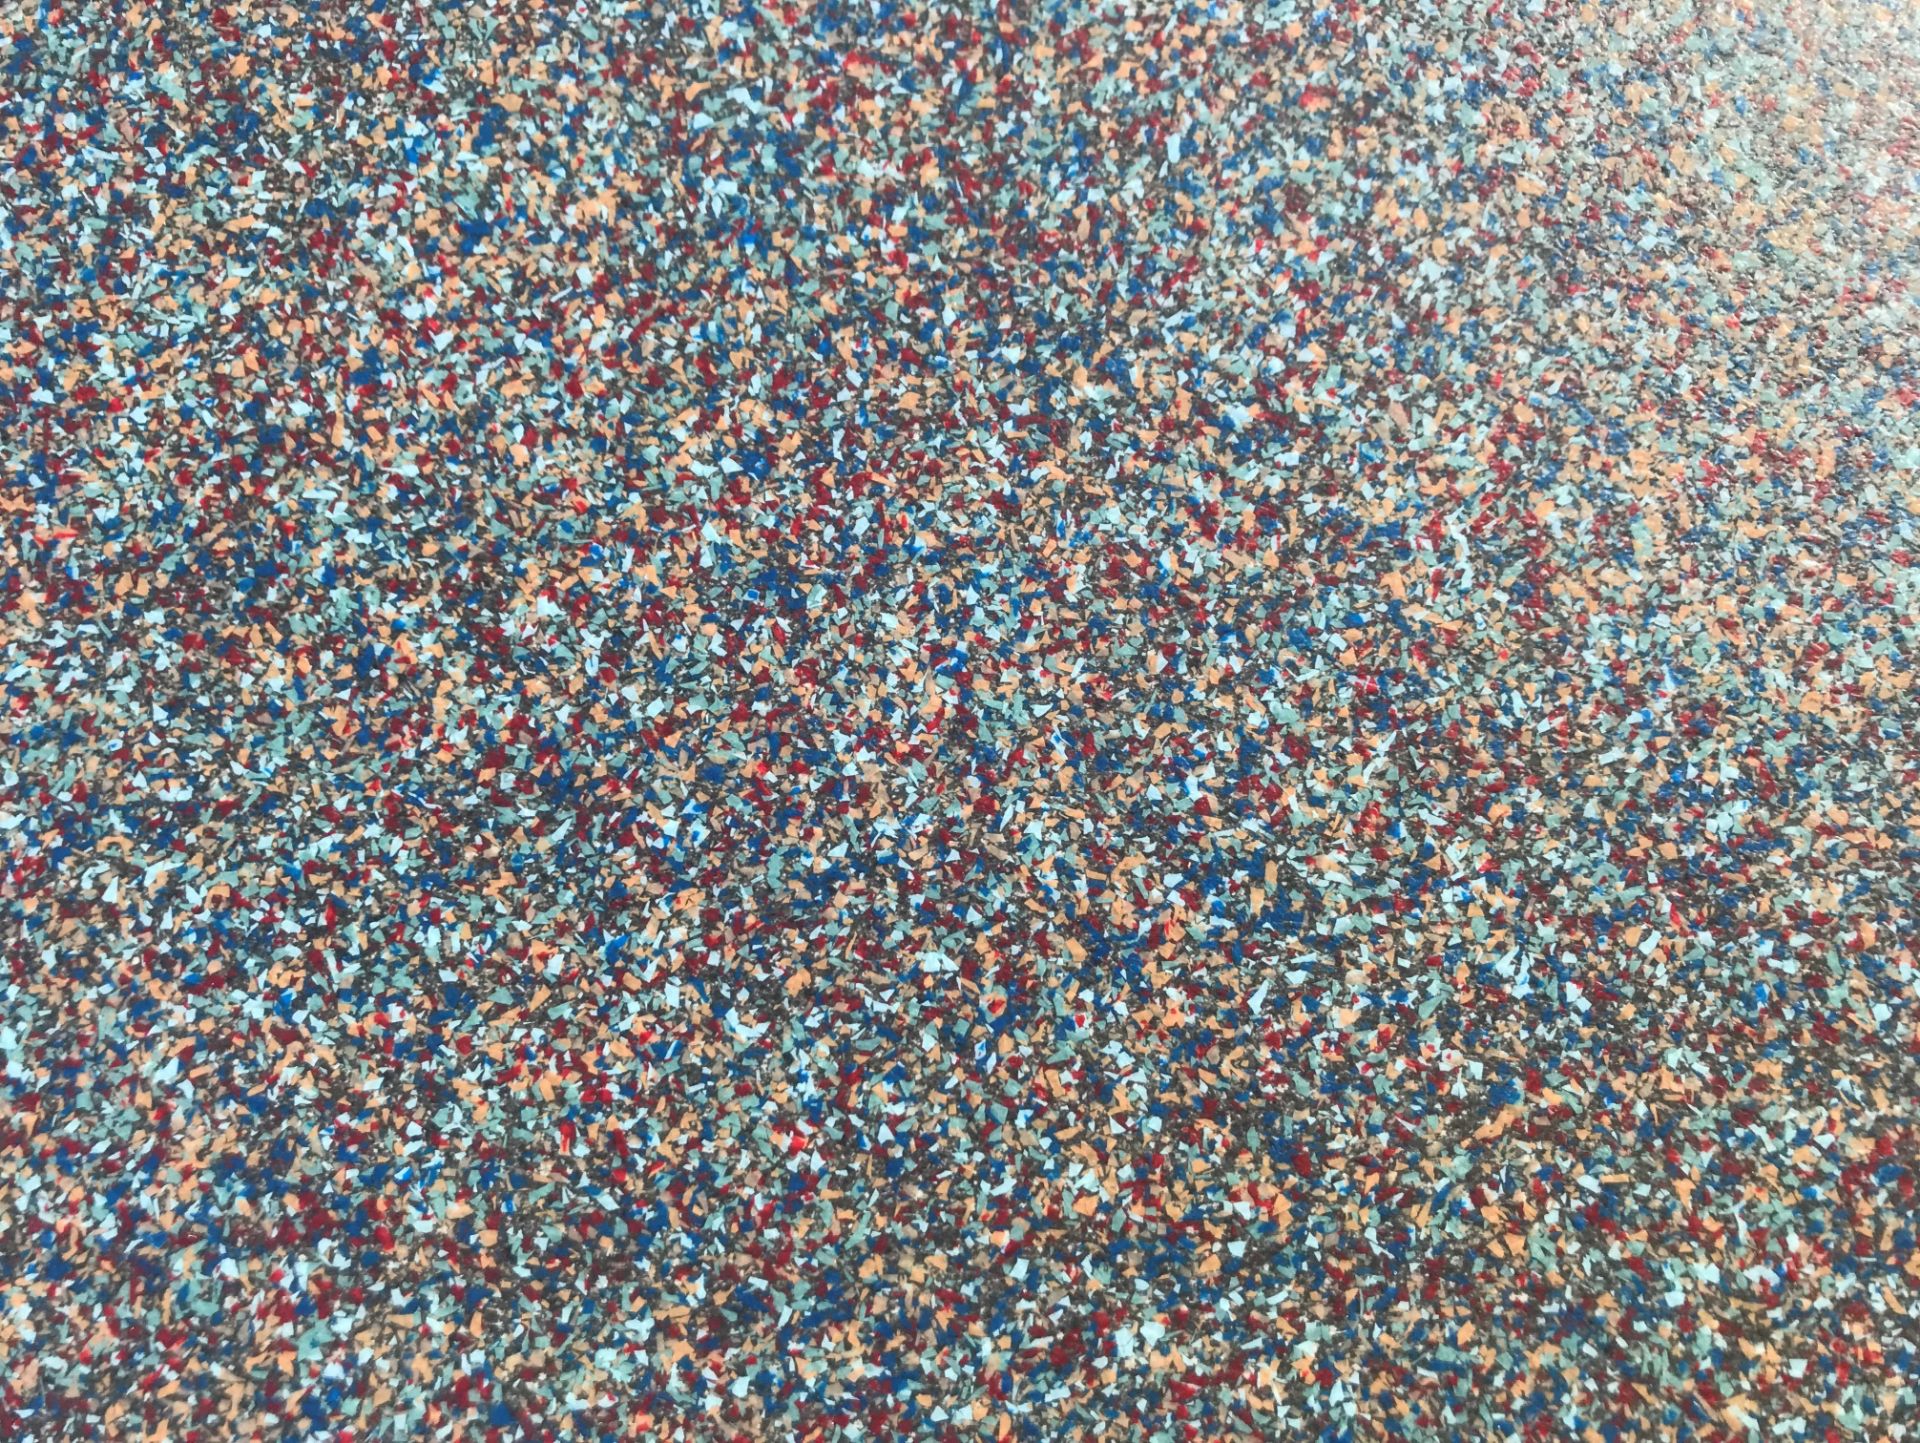 1 x GERFLOR Tarkett Commercial Grade Safety Flooring - Colour Rainbow Skittles - 20X2M Roll - Ref: - Image 2 of 3